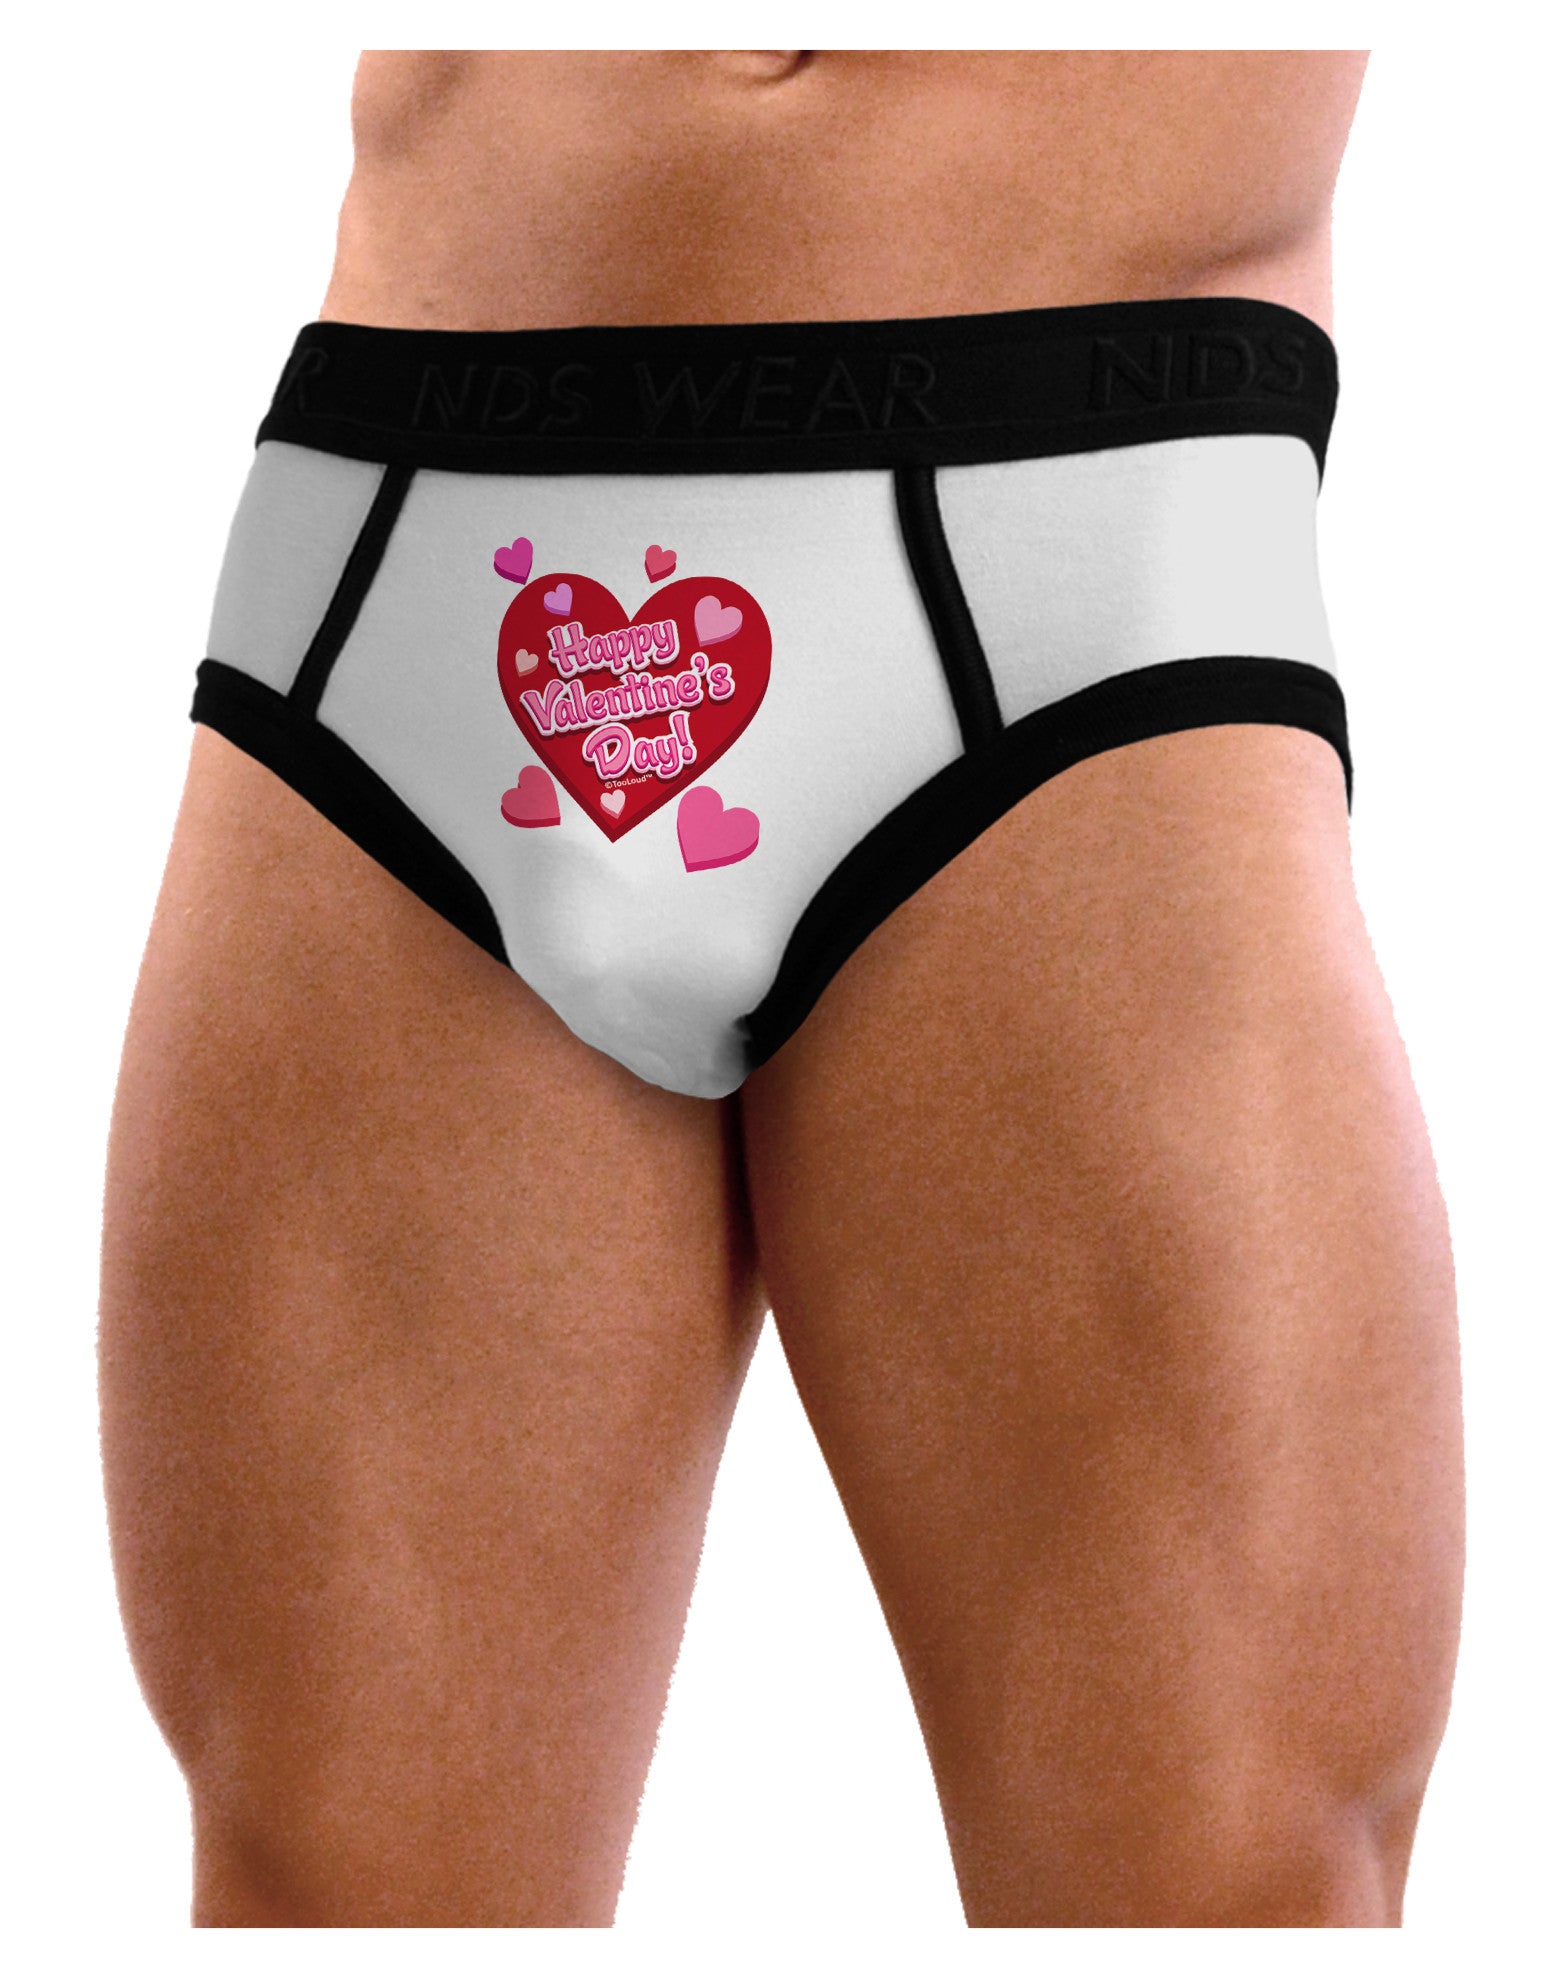 Hearts Men's Underwear